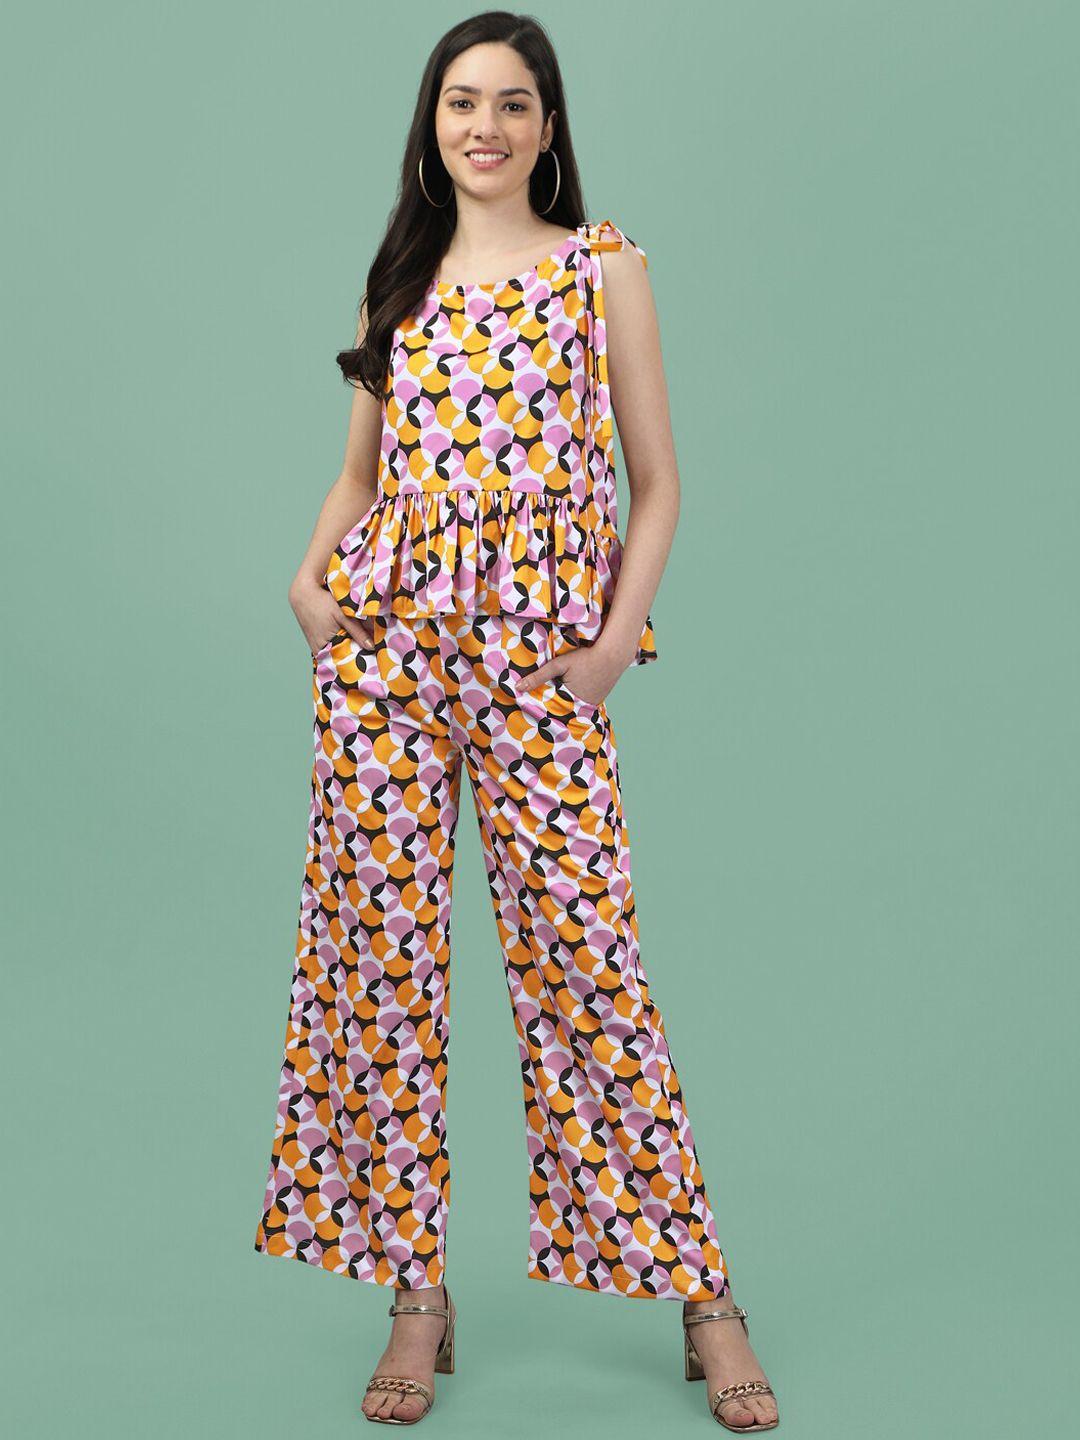 masakali.co women geometric printed top & trousers co-ords